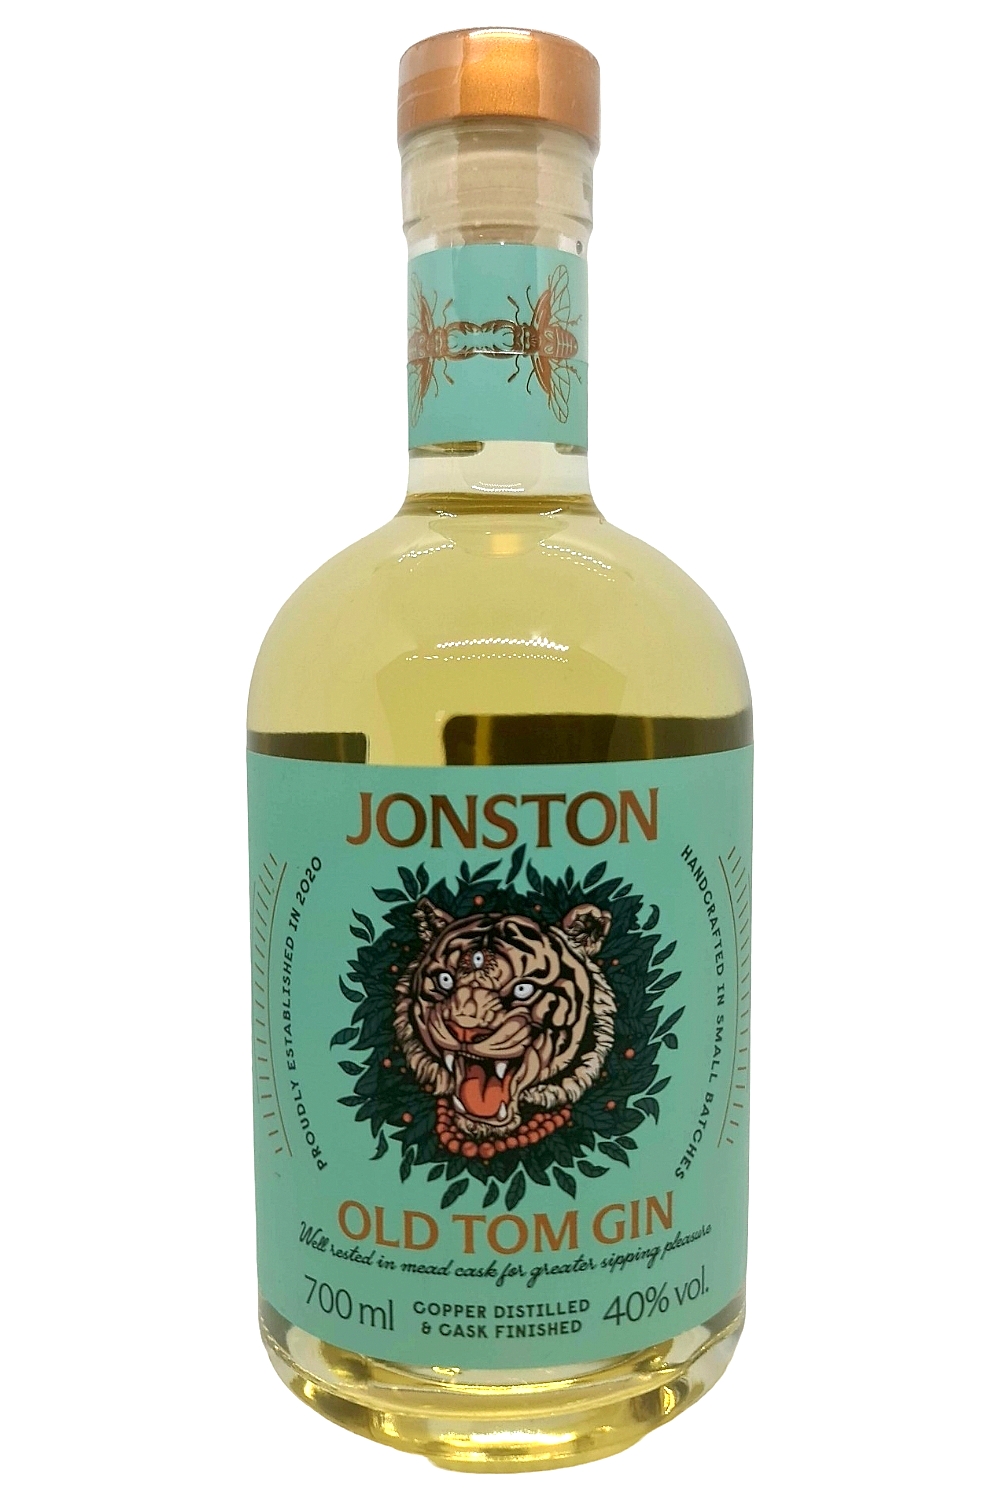 Jonston Old Tom Gin